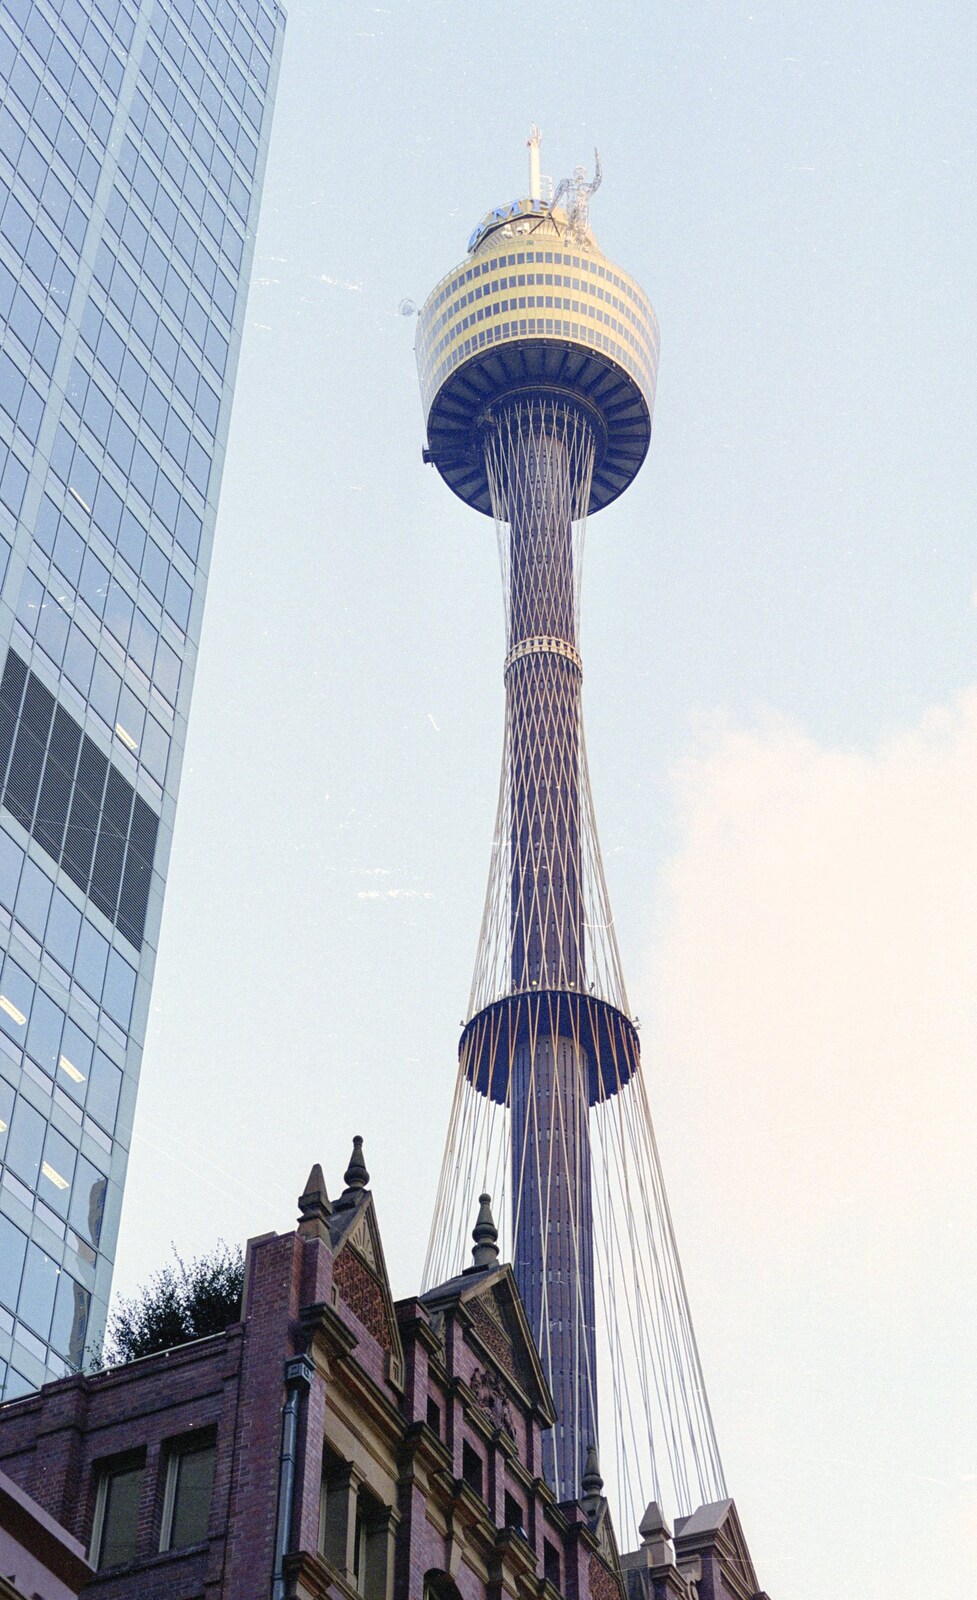 The Sydney Tower from Sydney Triathlon, Sydney, Australia - 16th April 2000